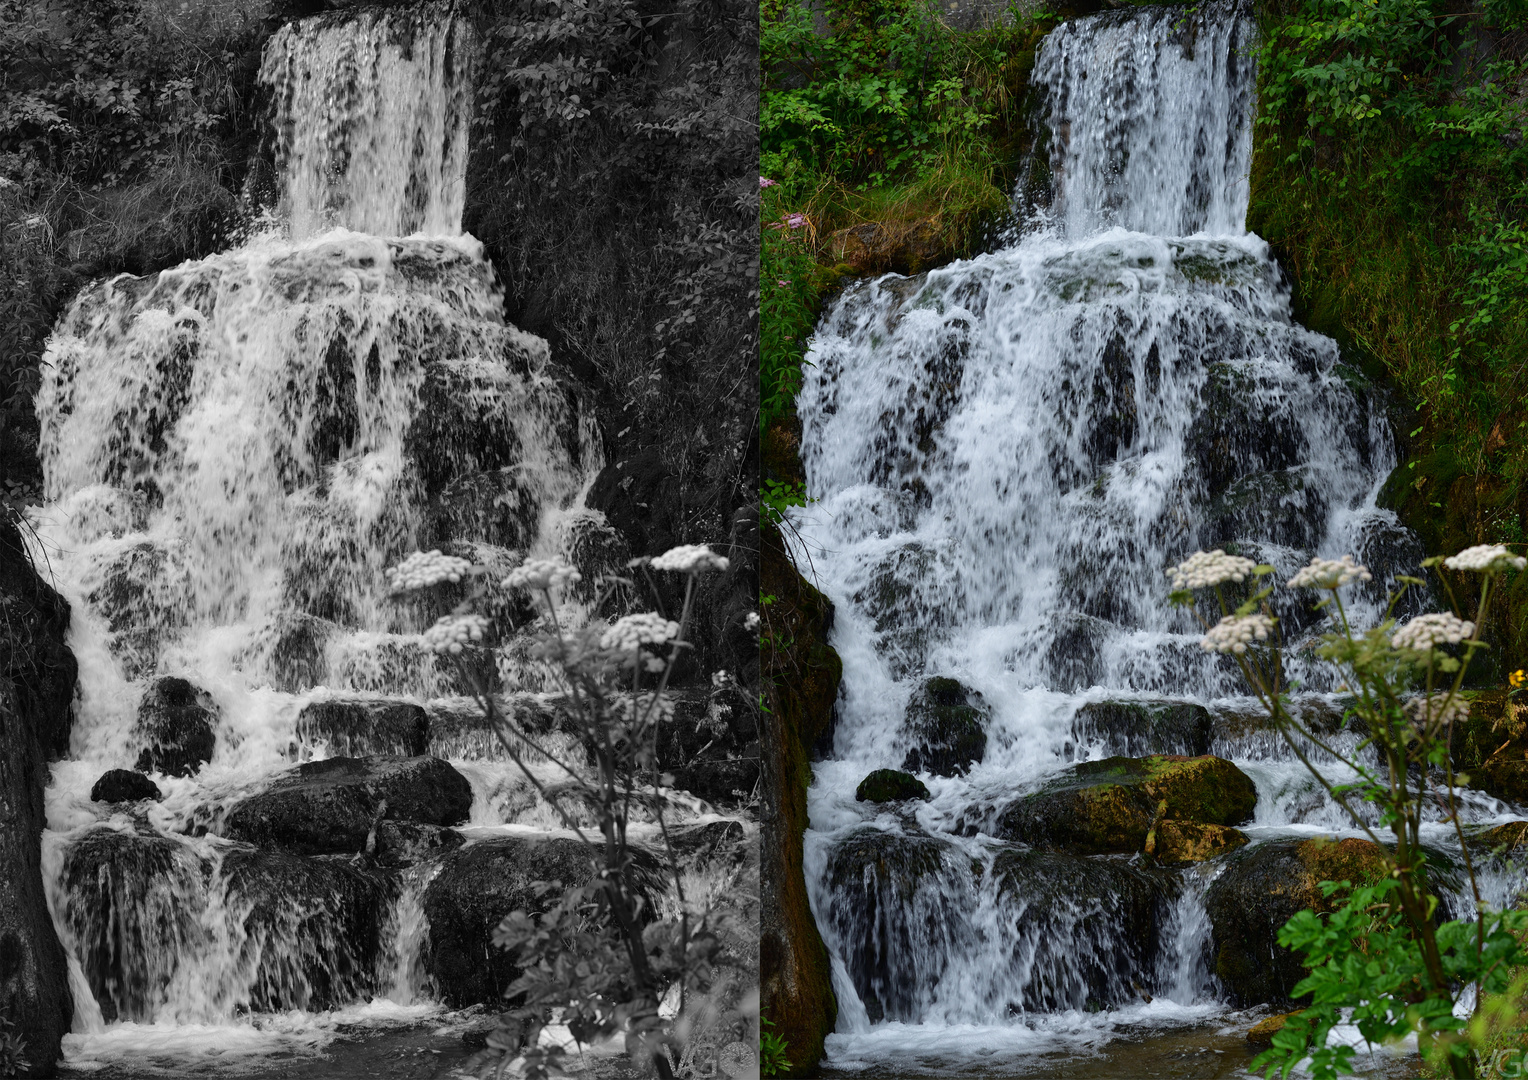 Wasserfall Collage